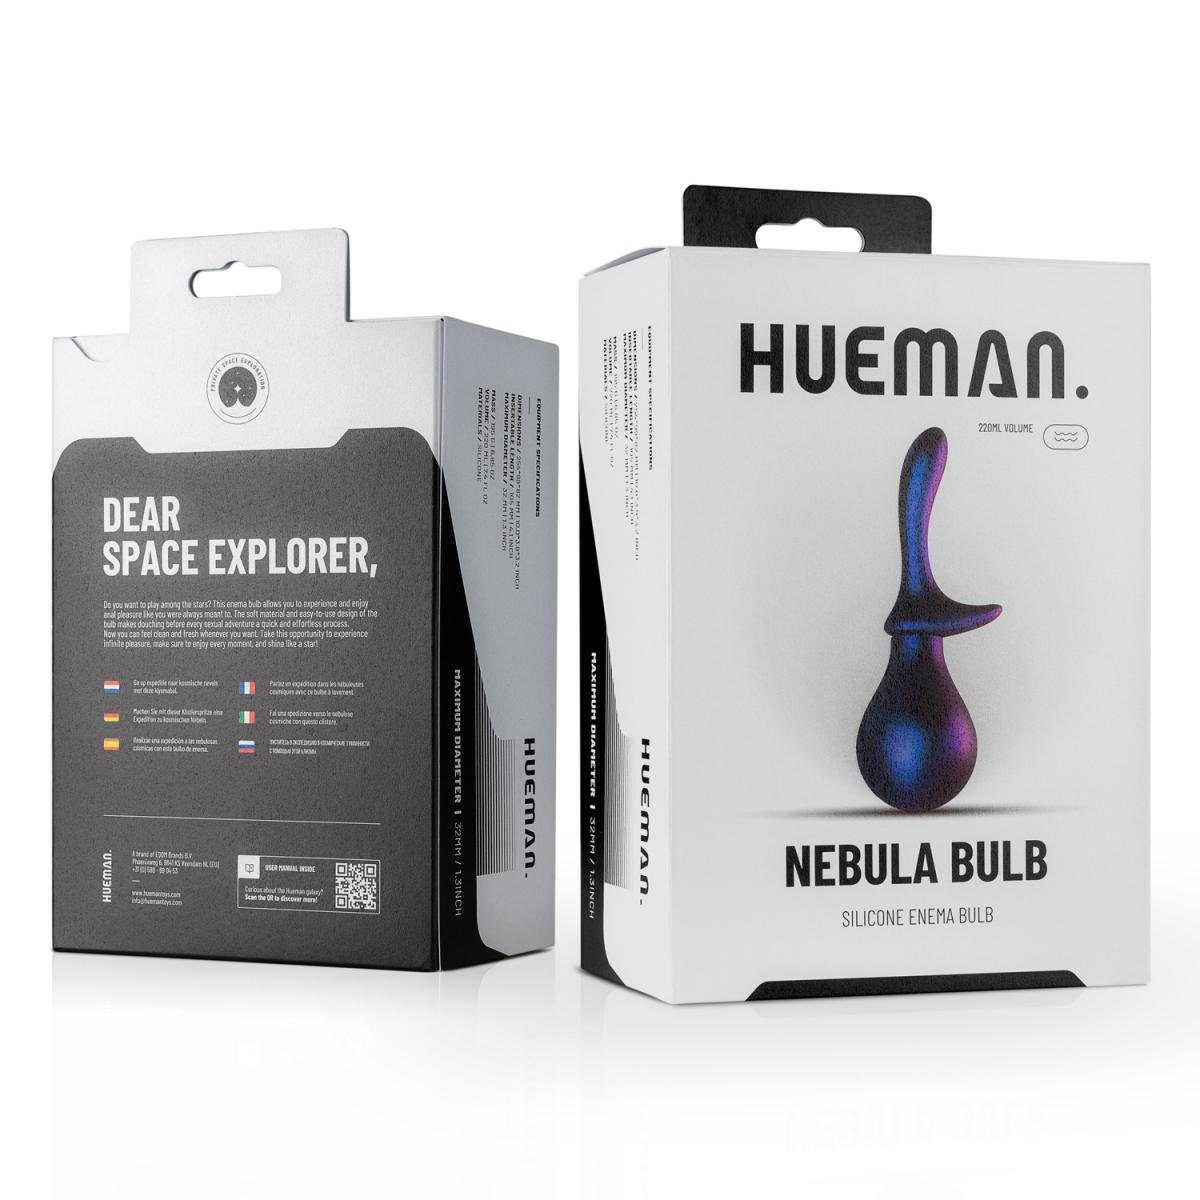 Silikon Nebula ml Analdusche Analdusche Intimdusche Hueman 220 Bulb